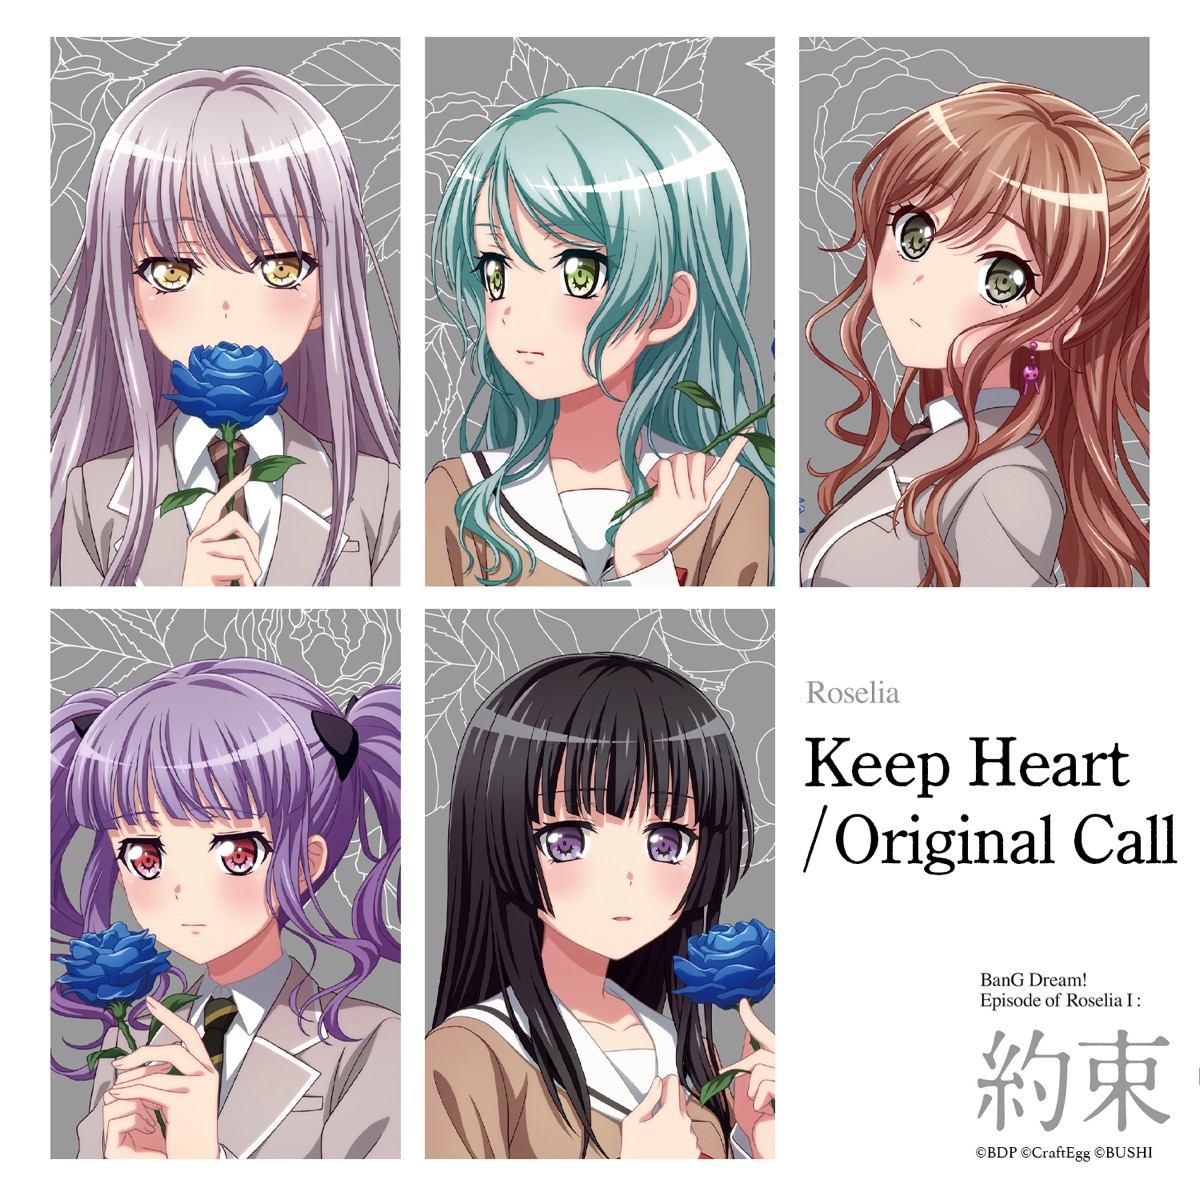 『Roselia - Keep Heart』収録の『Keep Heart / Original Call』ジャケット